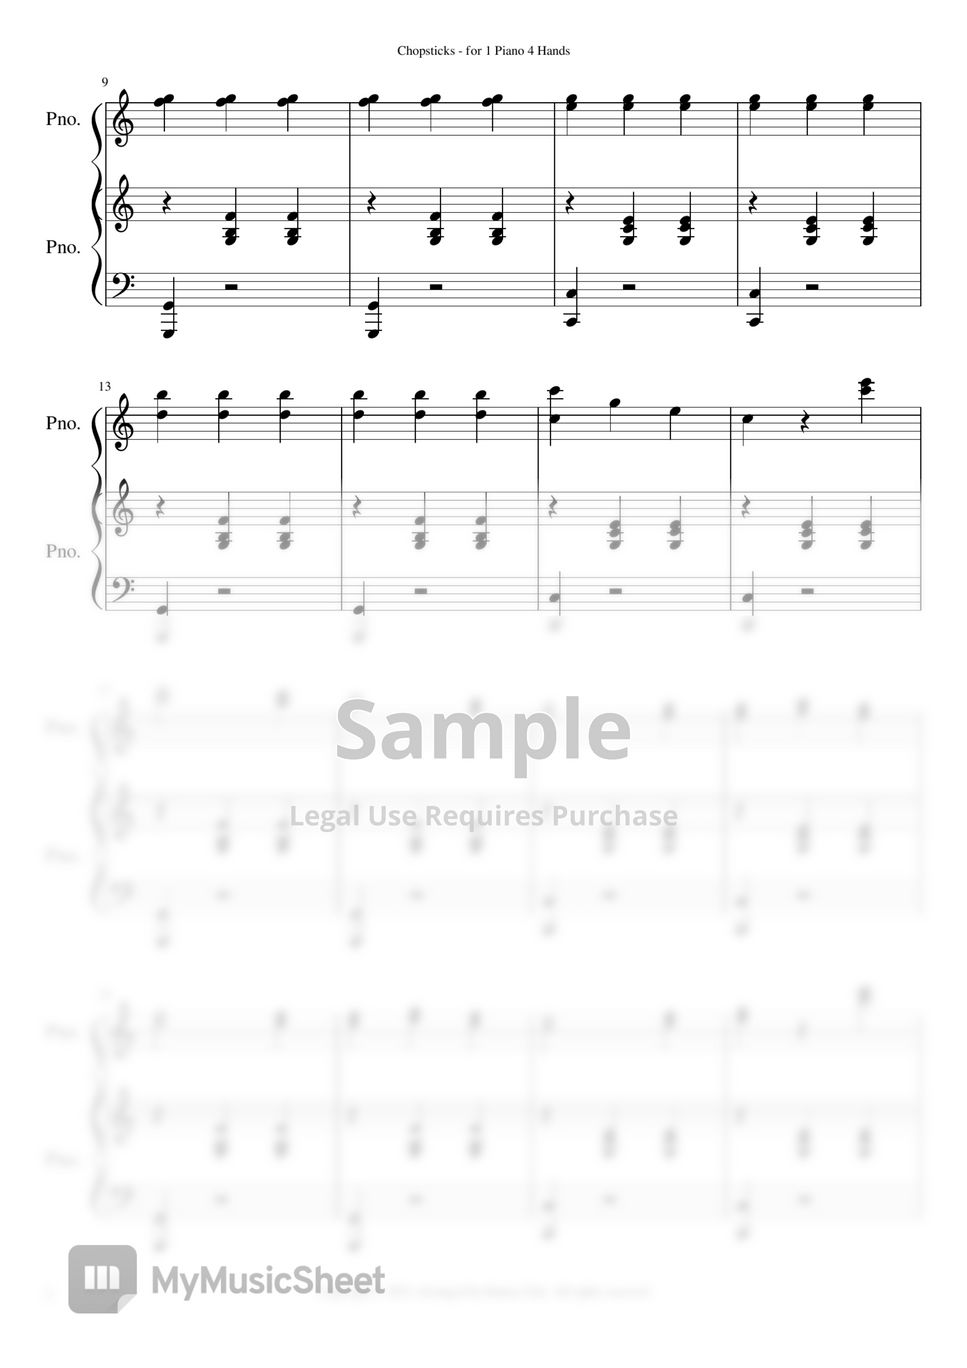 de Lulli - Chopsticks (젓가락 행진곡)- 피아노 듀엣 (1Piano 4 Hands) (Easy Level) by HANNA